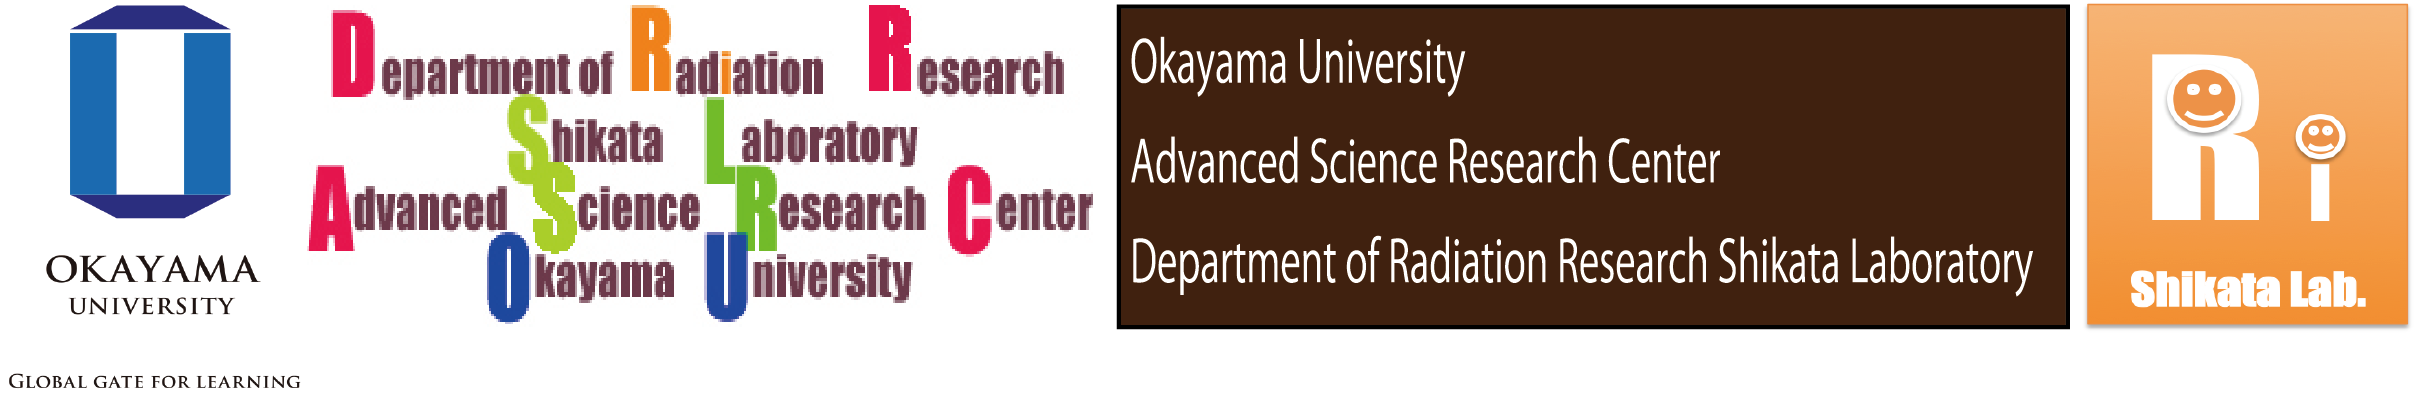 Department of Radiation Research, Shikata Laboratory <br> Okayama University Advanced Science Research Center